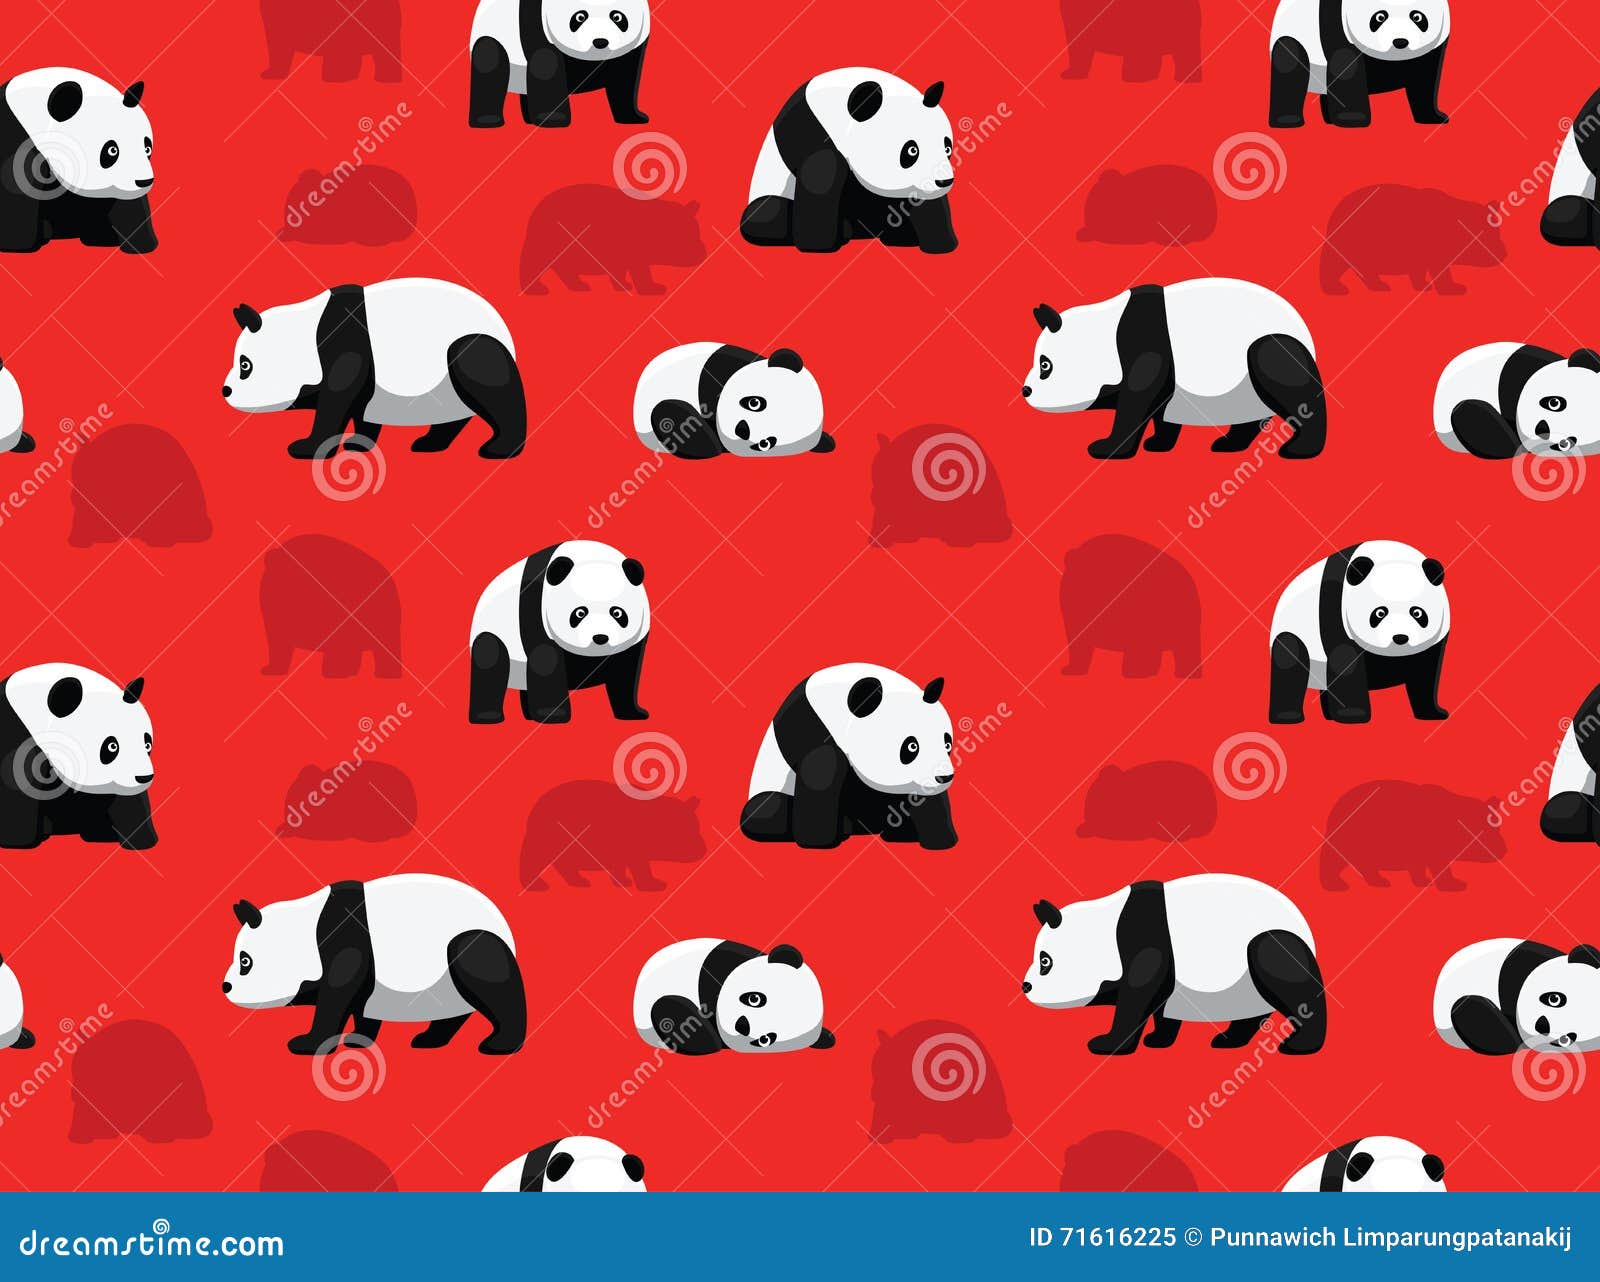 Wallpaper paylaşımları  Cute Panda Wallpaper For Android  Best HD  Wallpapers  Facebook